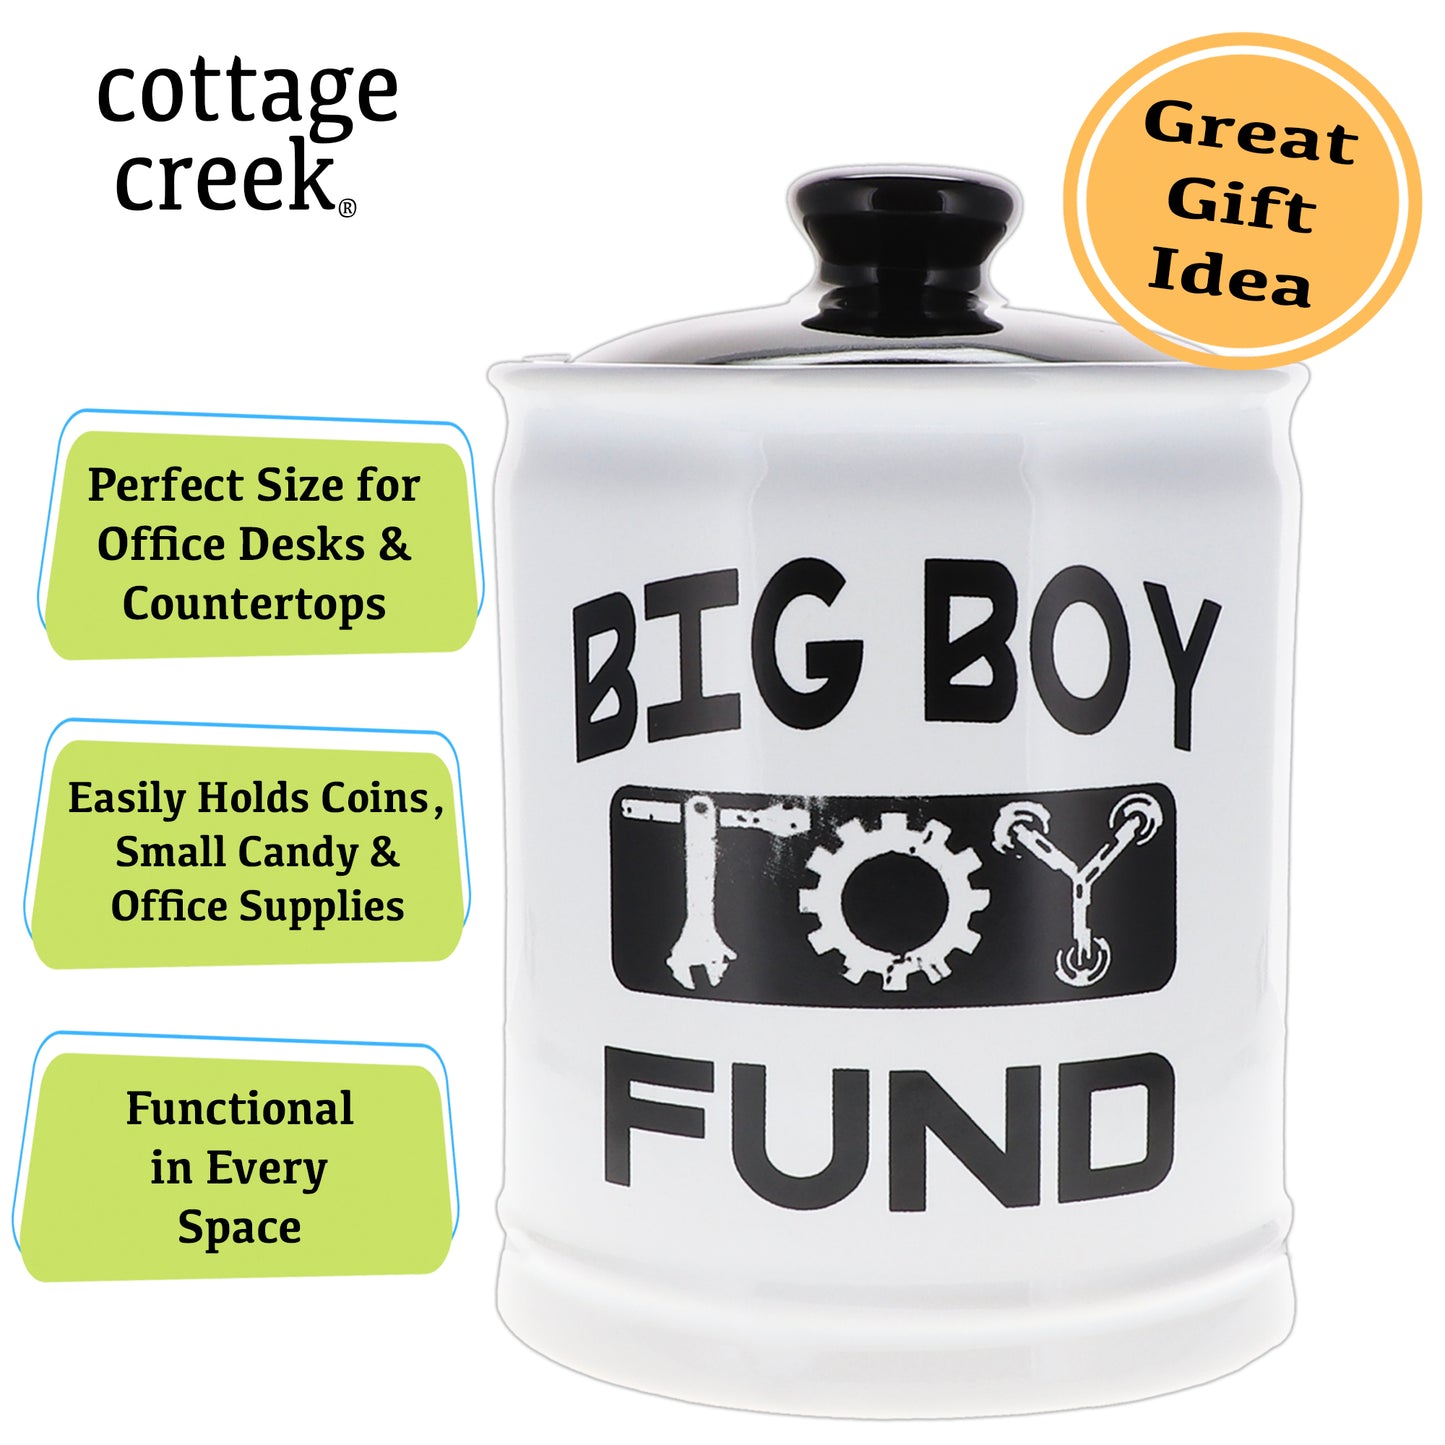 Cottage Creek Big Boy Toy Fund Piggy Bank, Ceramic, 6", Multicolored Candy Jar